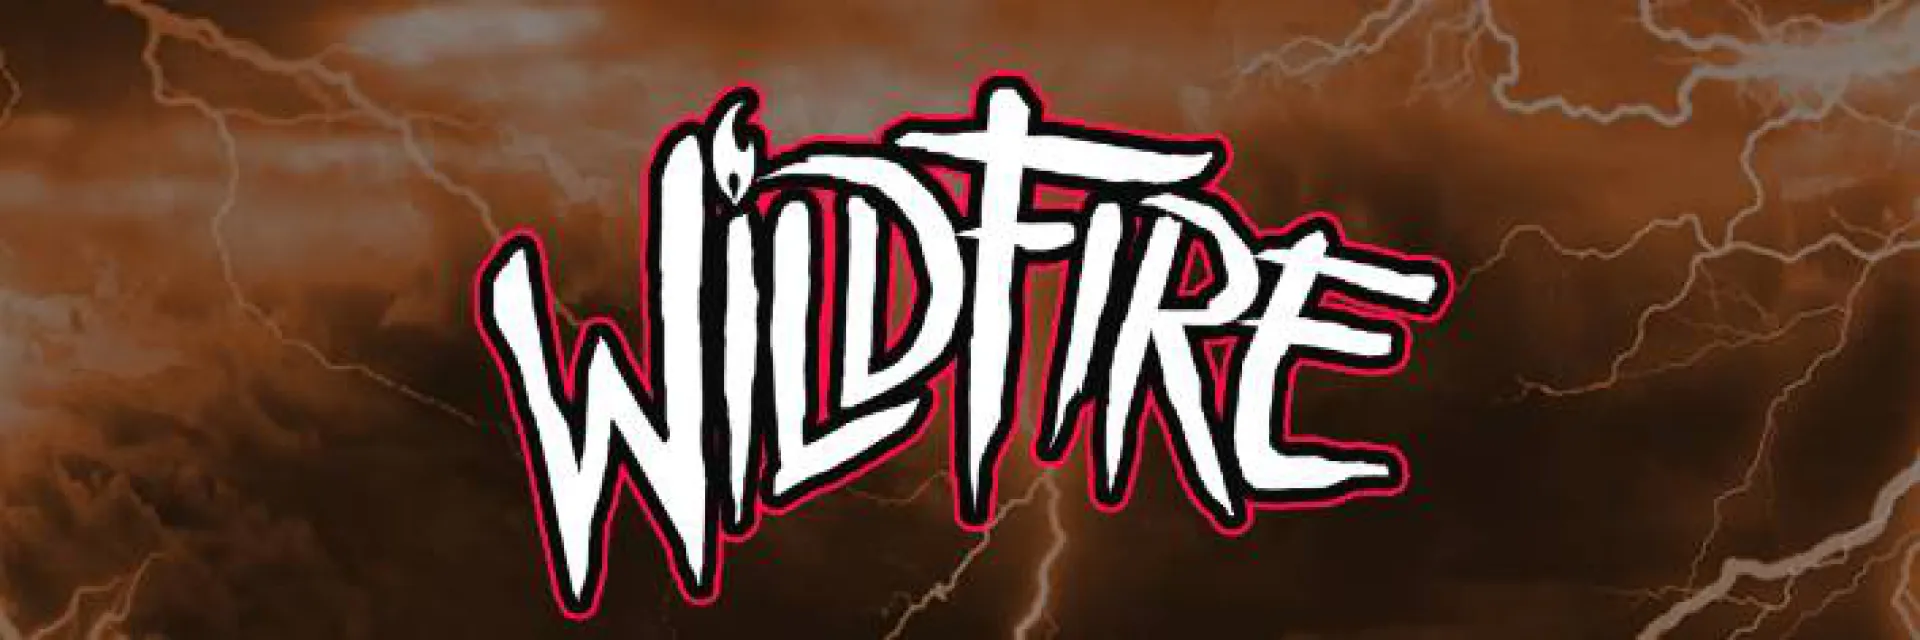 Wildfire 3 x 1.jpg